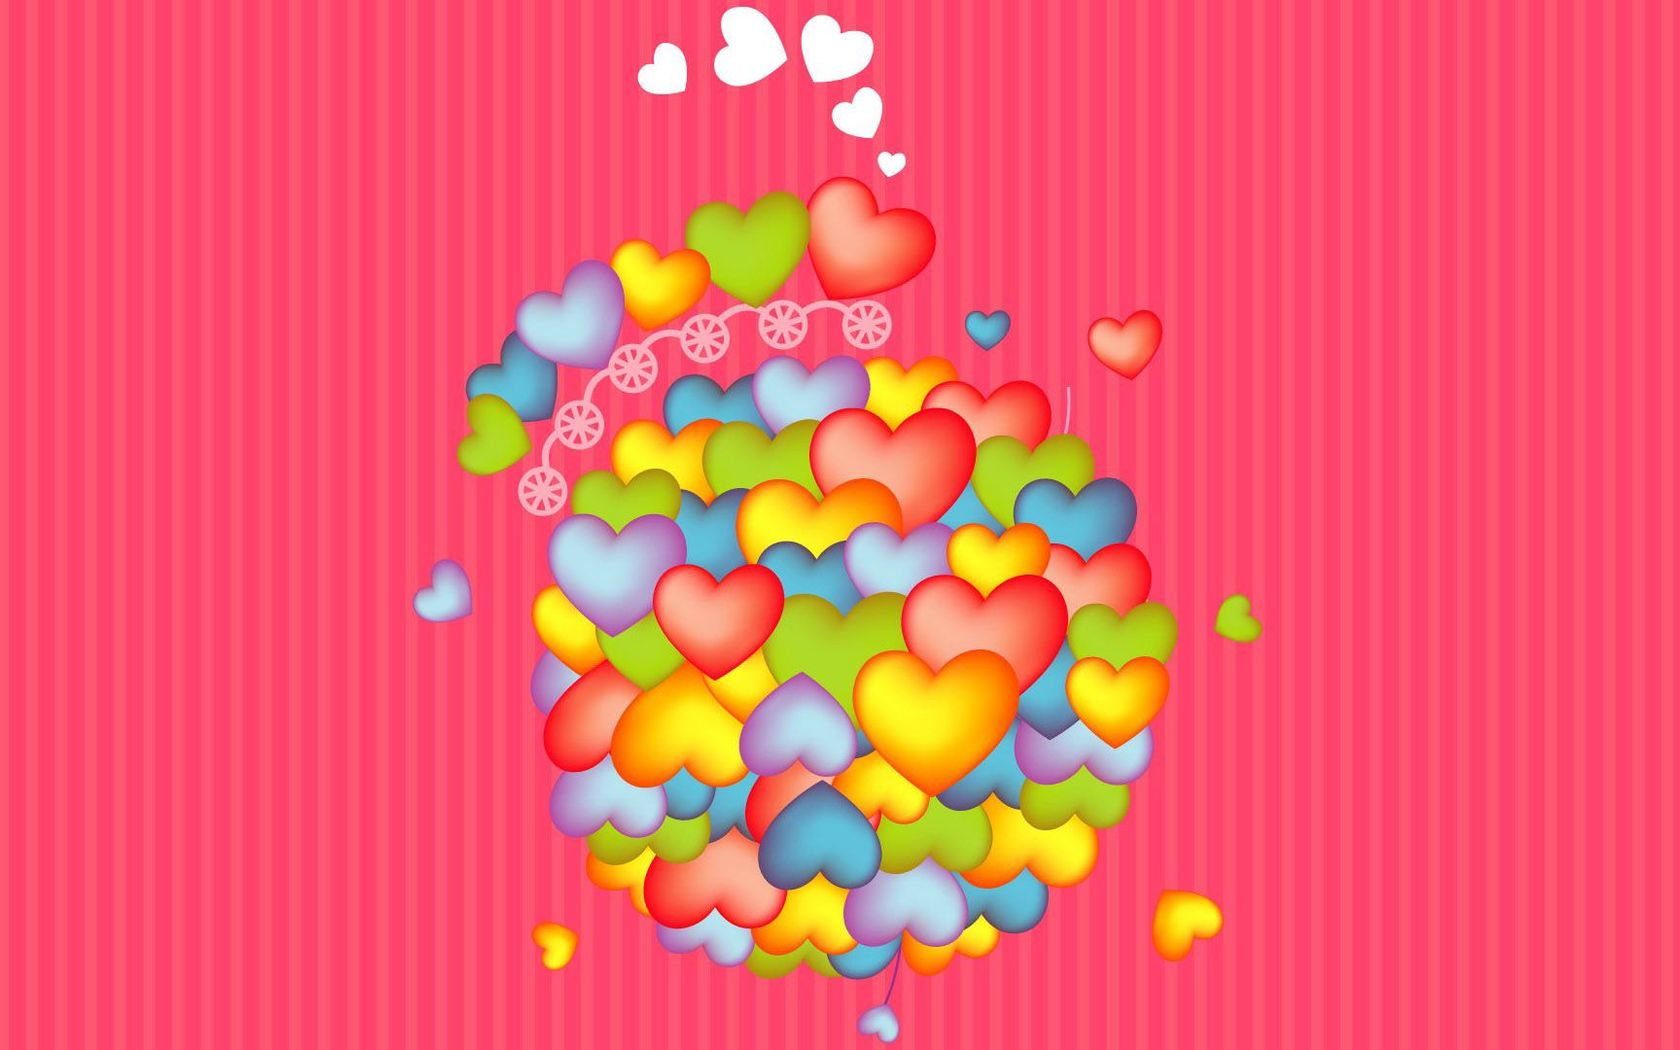 Colorful flaoting hearts wallpaper